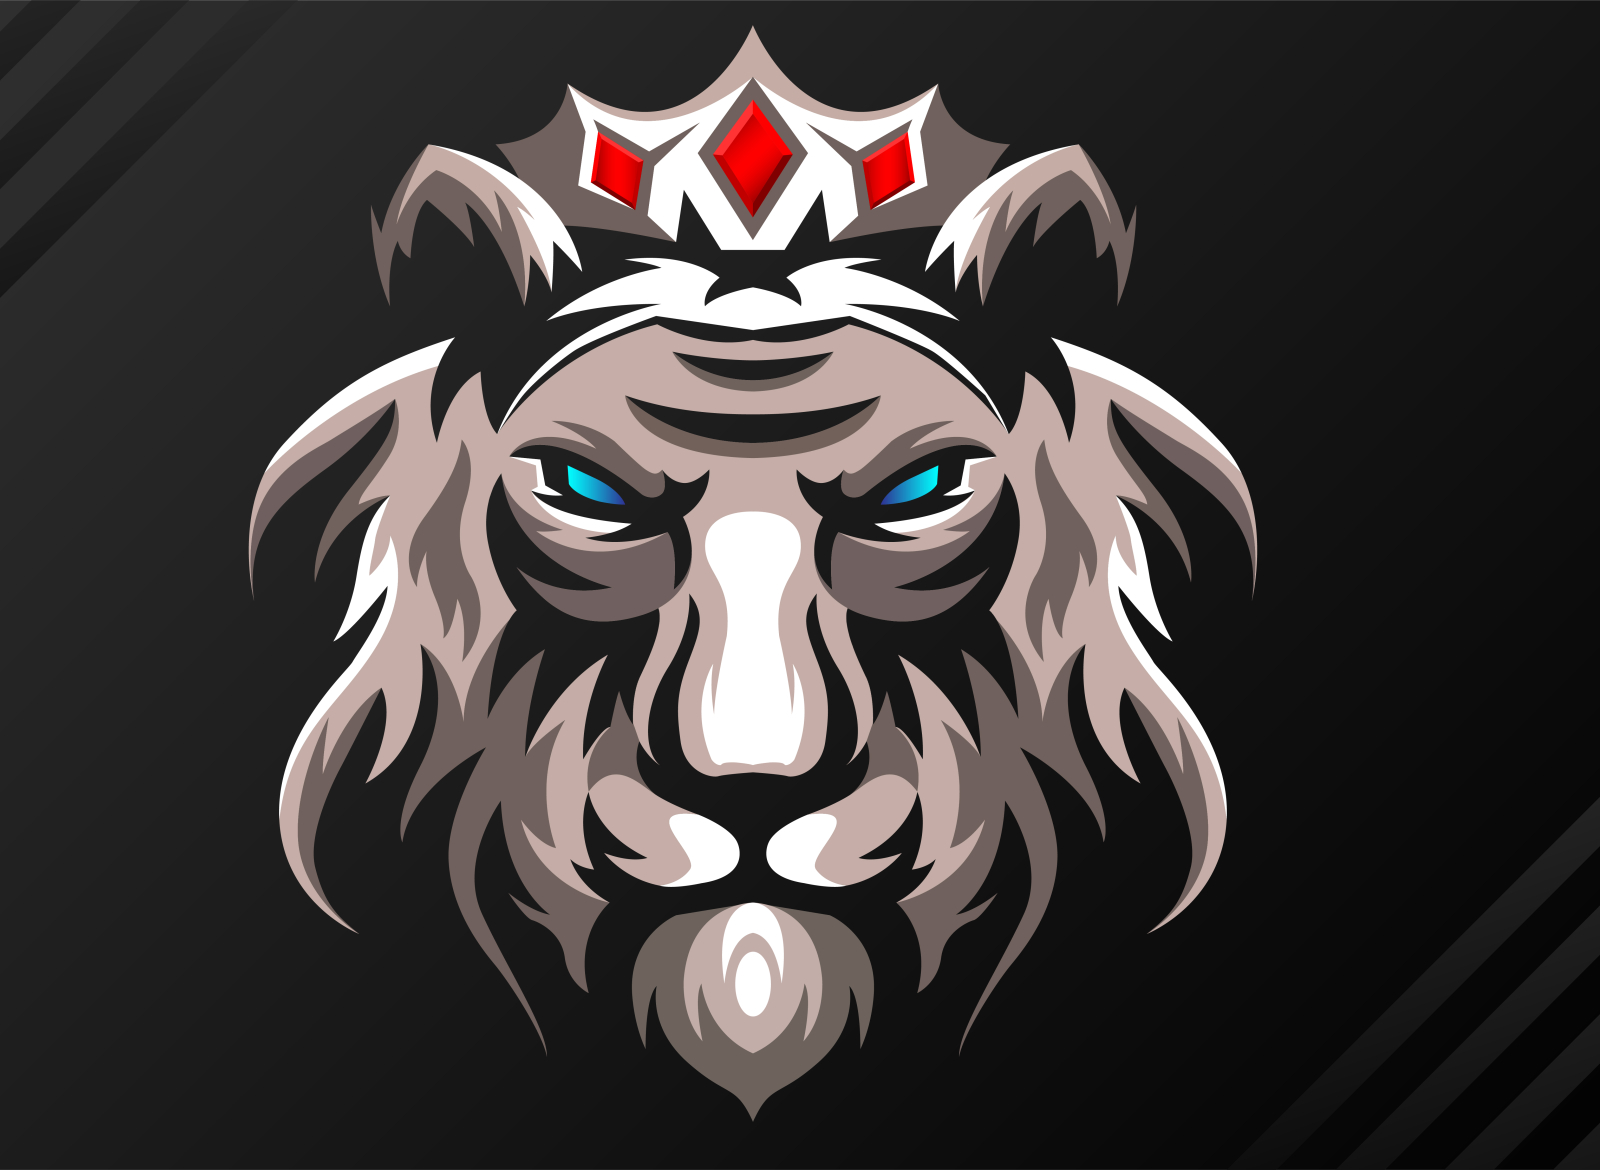 The Lion King Logo PNG Transparent & SVG Vector - Freebie Supply